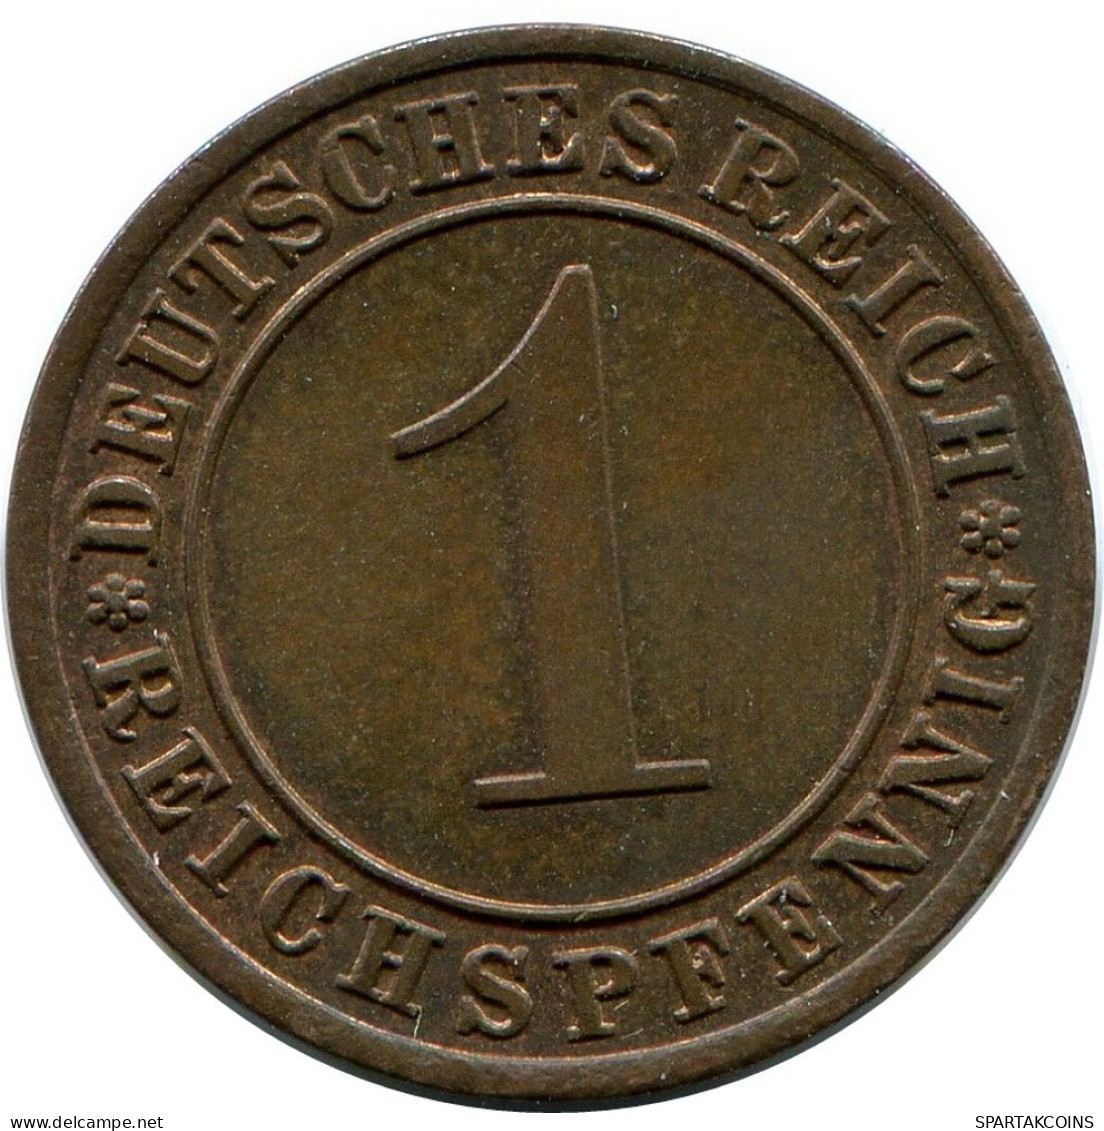 1 REICHSPFENNIG 1934 A ALEMANIA Moneda GERMANY #DB794.E.A - 1 Reichspfennig